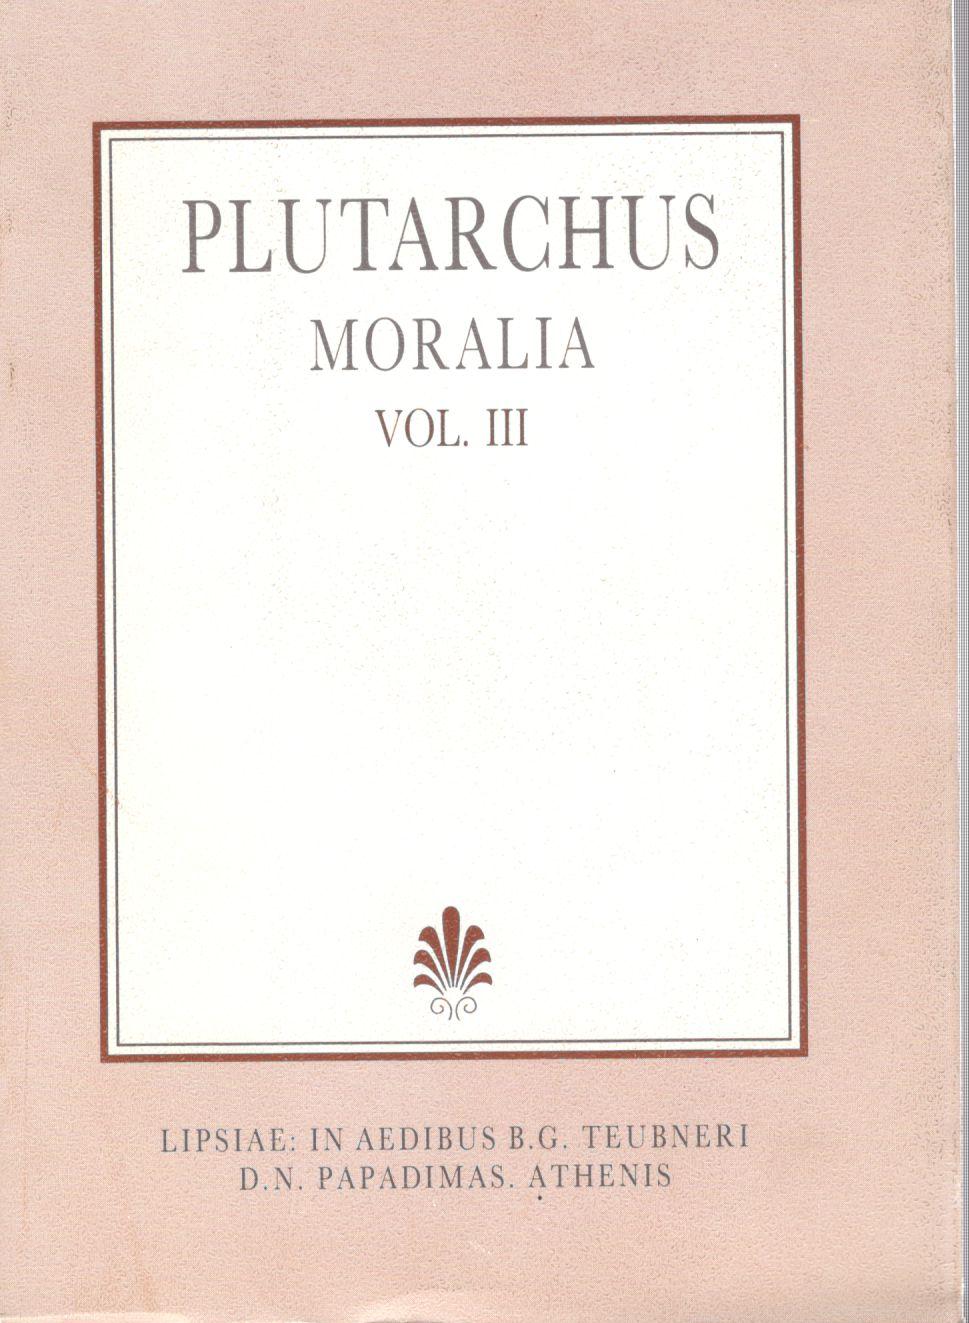 Plutarchi Moralia, Vol. III, [Πλουτάρχου, Ηθικά, τ. Γ